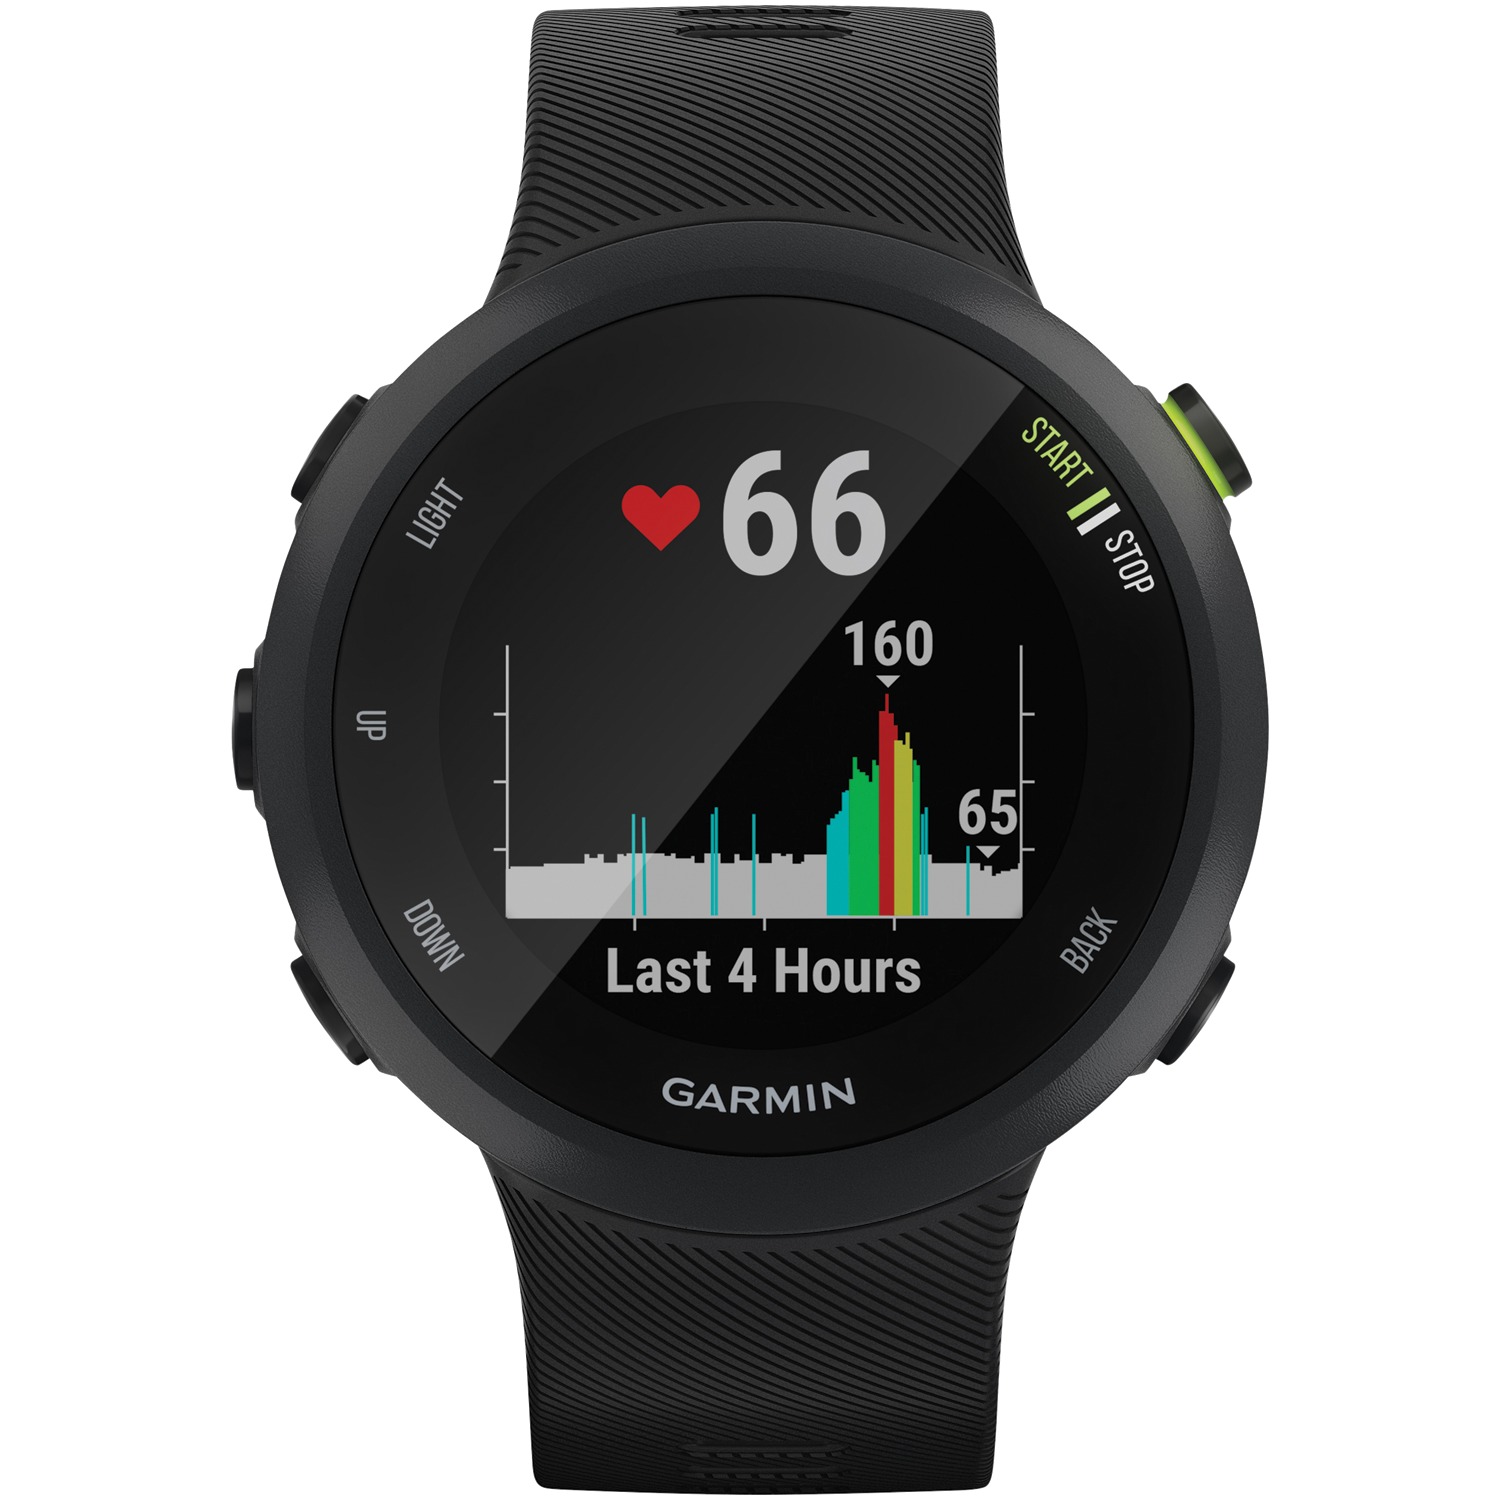 Forerunner® 45 GPS Running Watch in Black - image 4 of 11